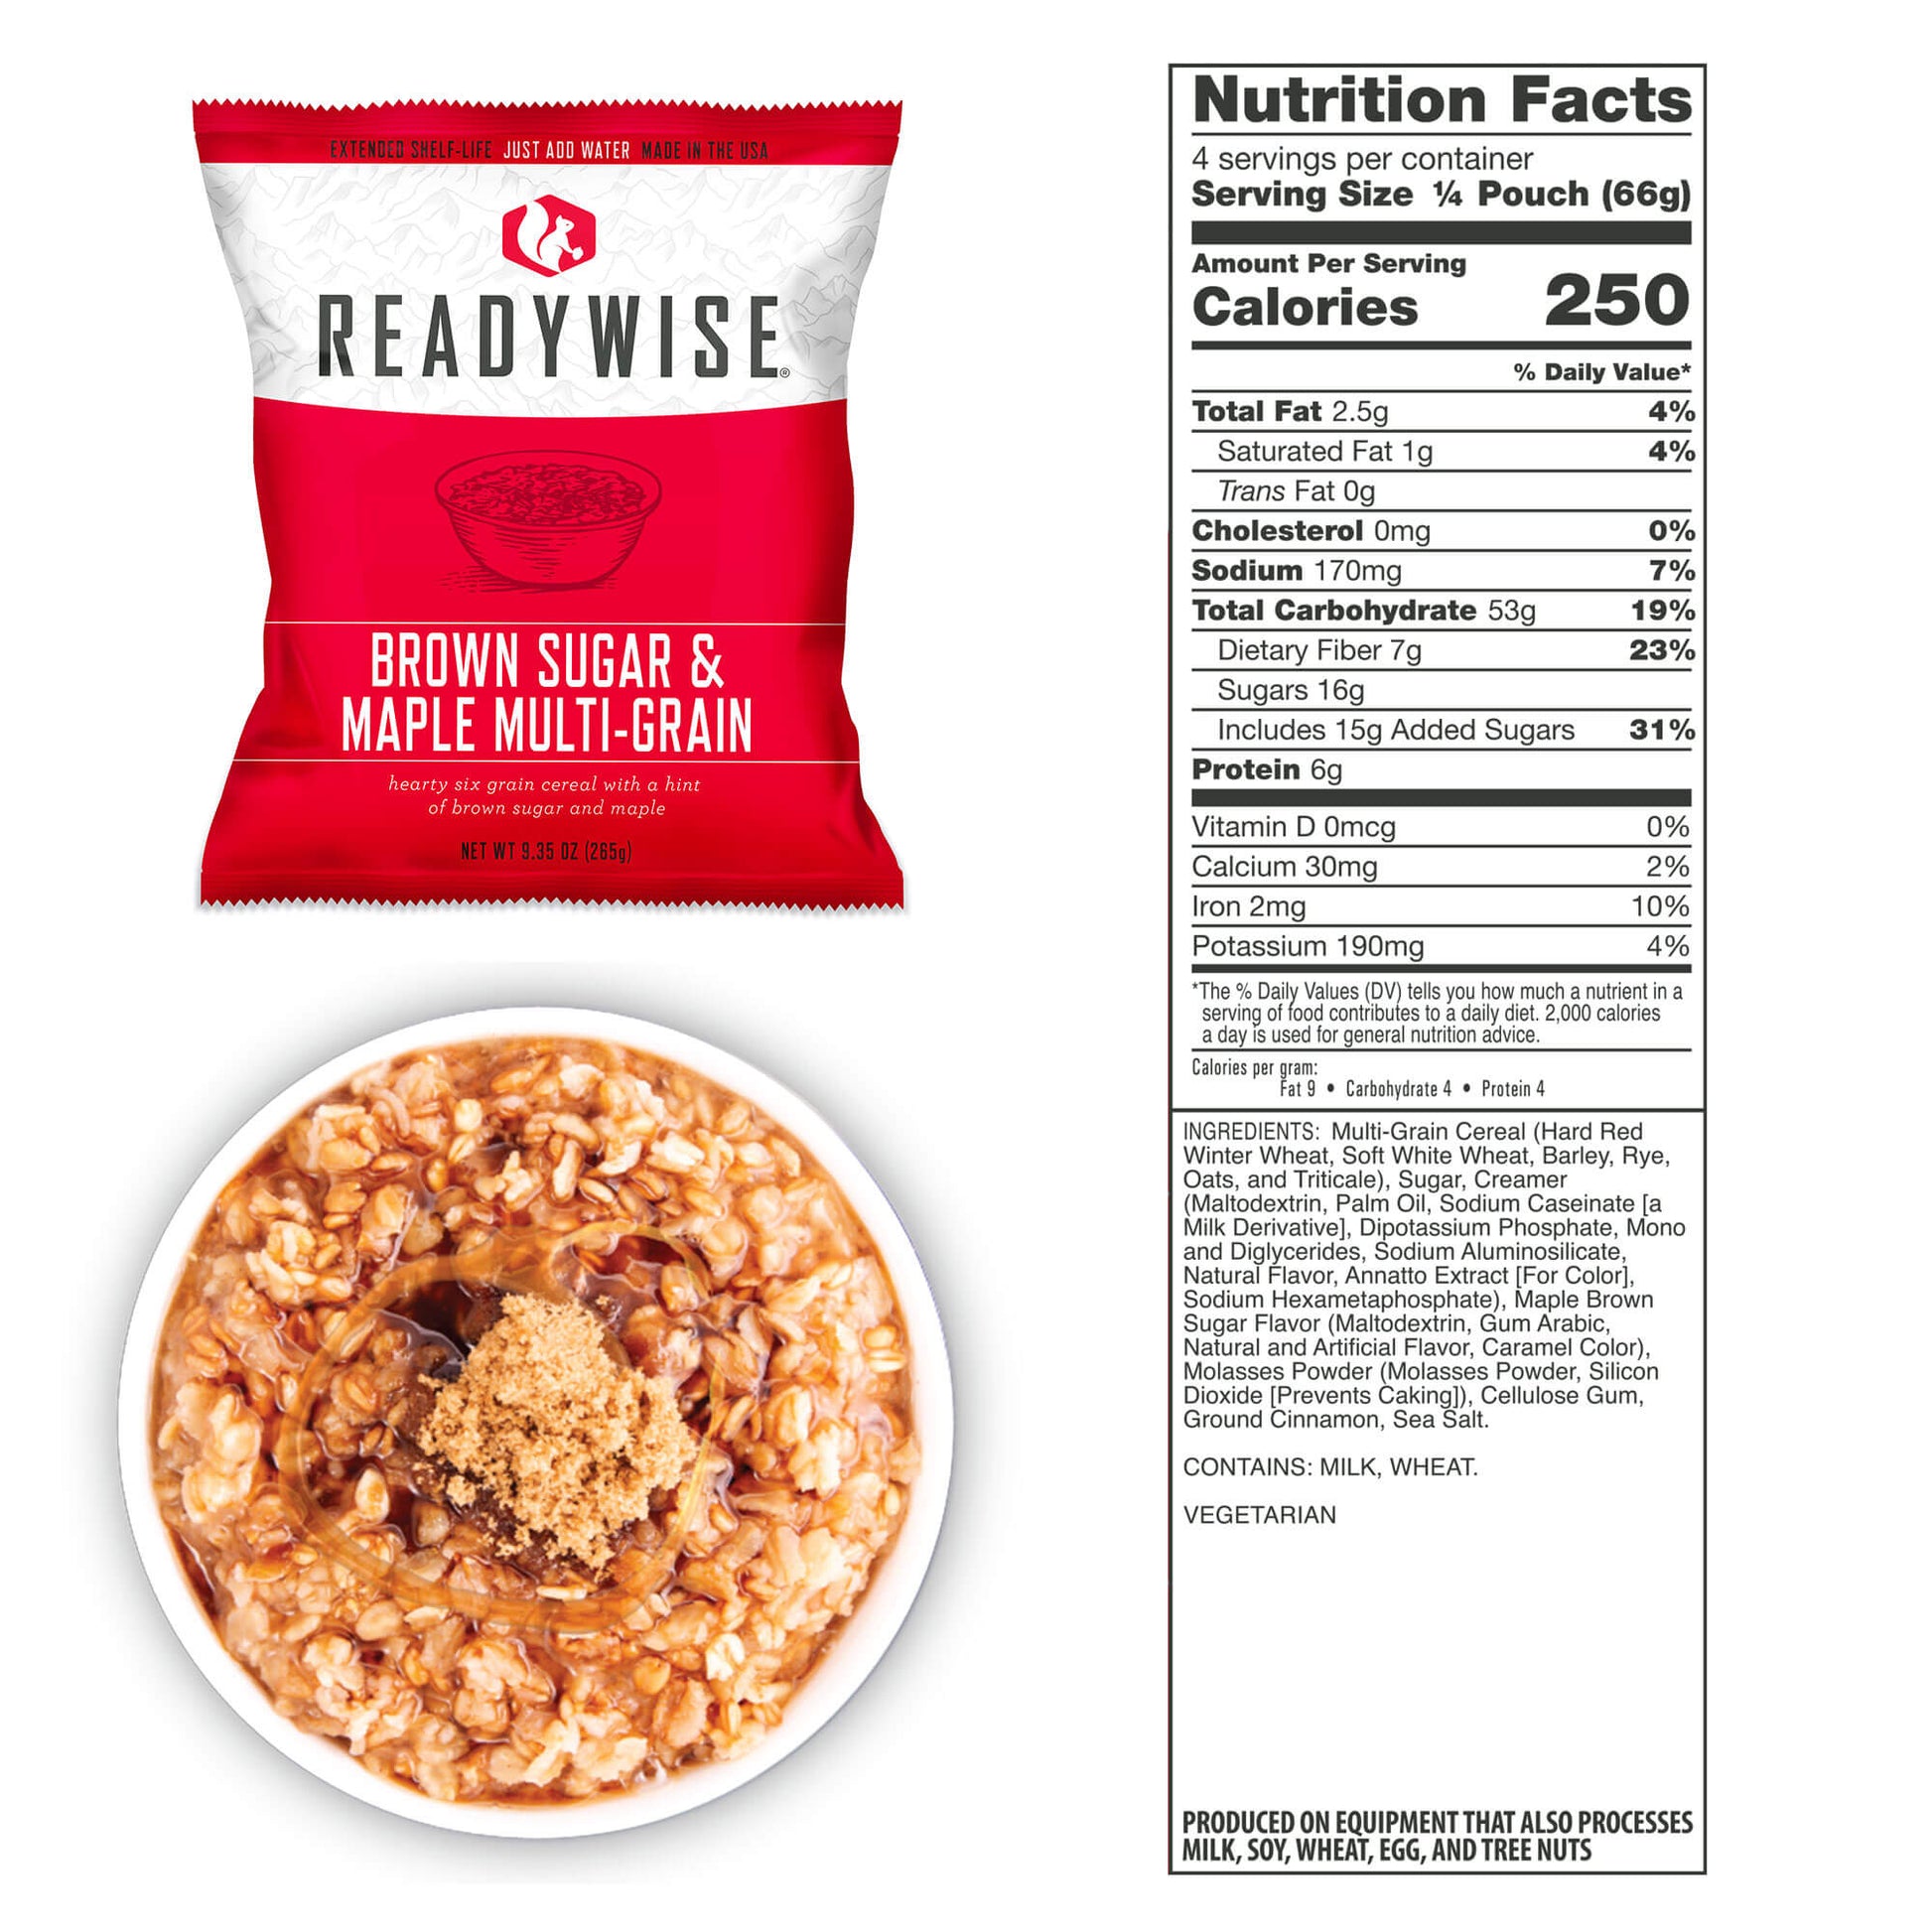 readywise emergency food supply 52 serving prepper pack food bucket brown sugar and maple multi-grain nutritional information 